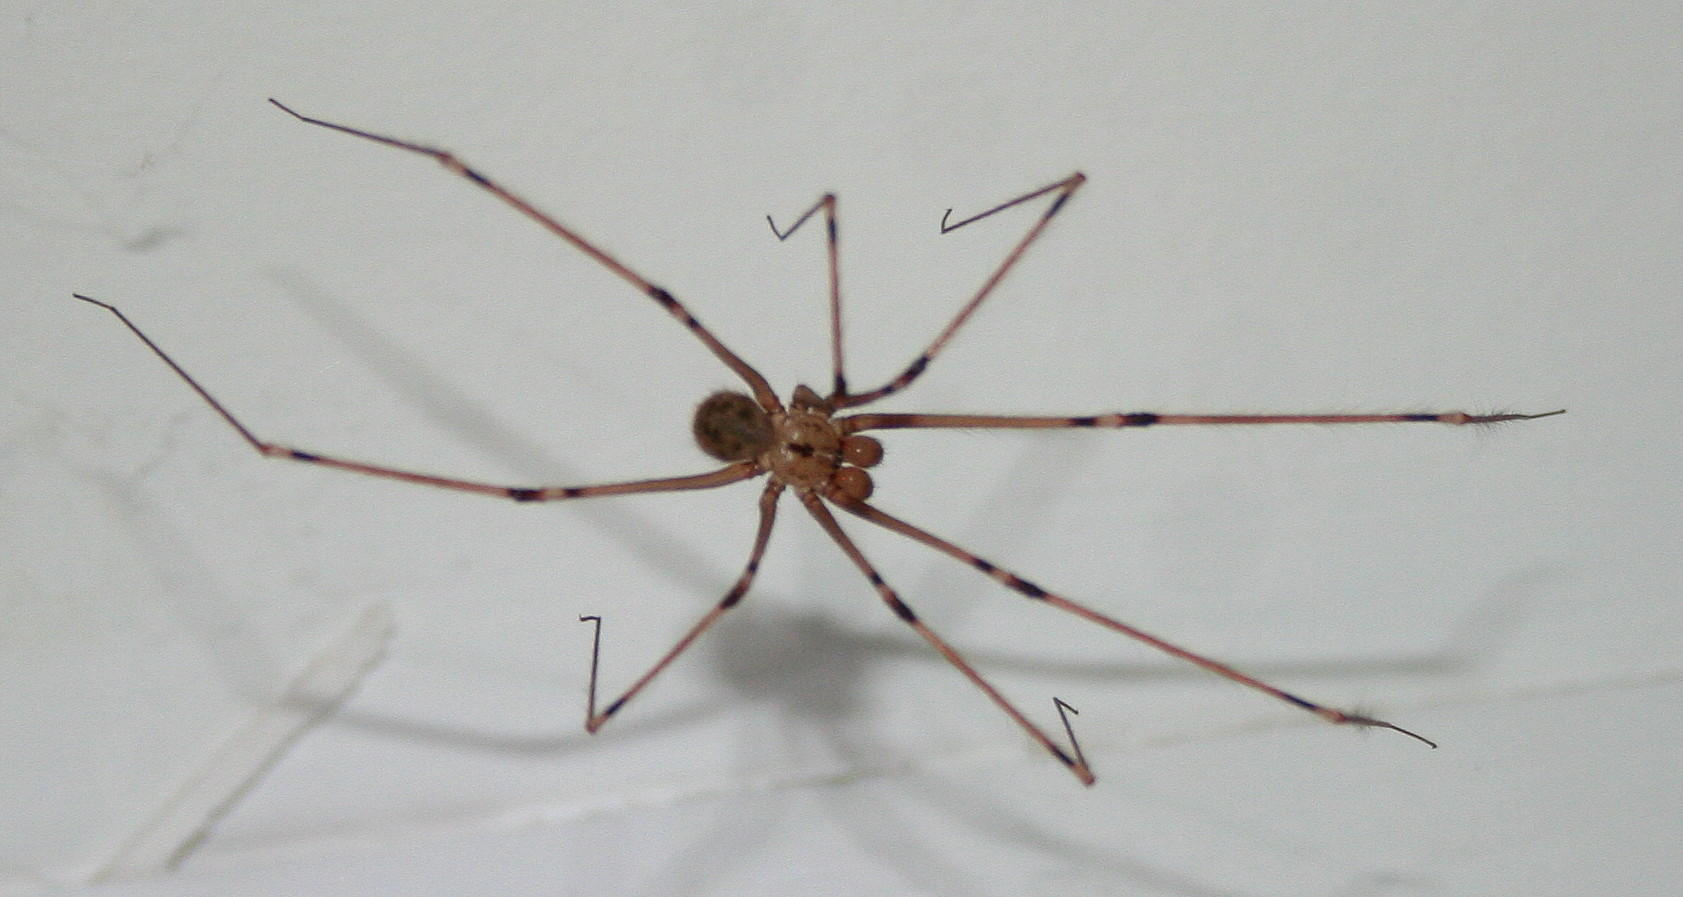 Artema atlanta (Giant Daddy-long-legs Spider) in Kihei, Maui